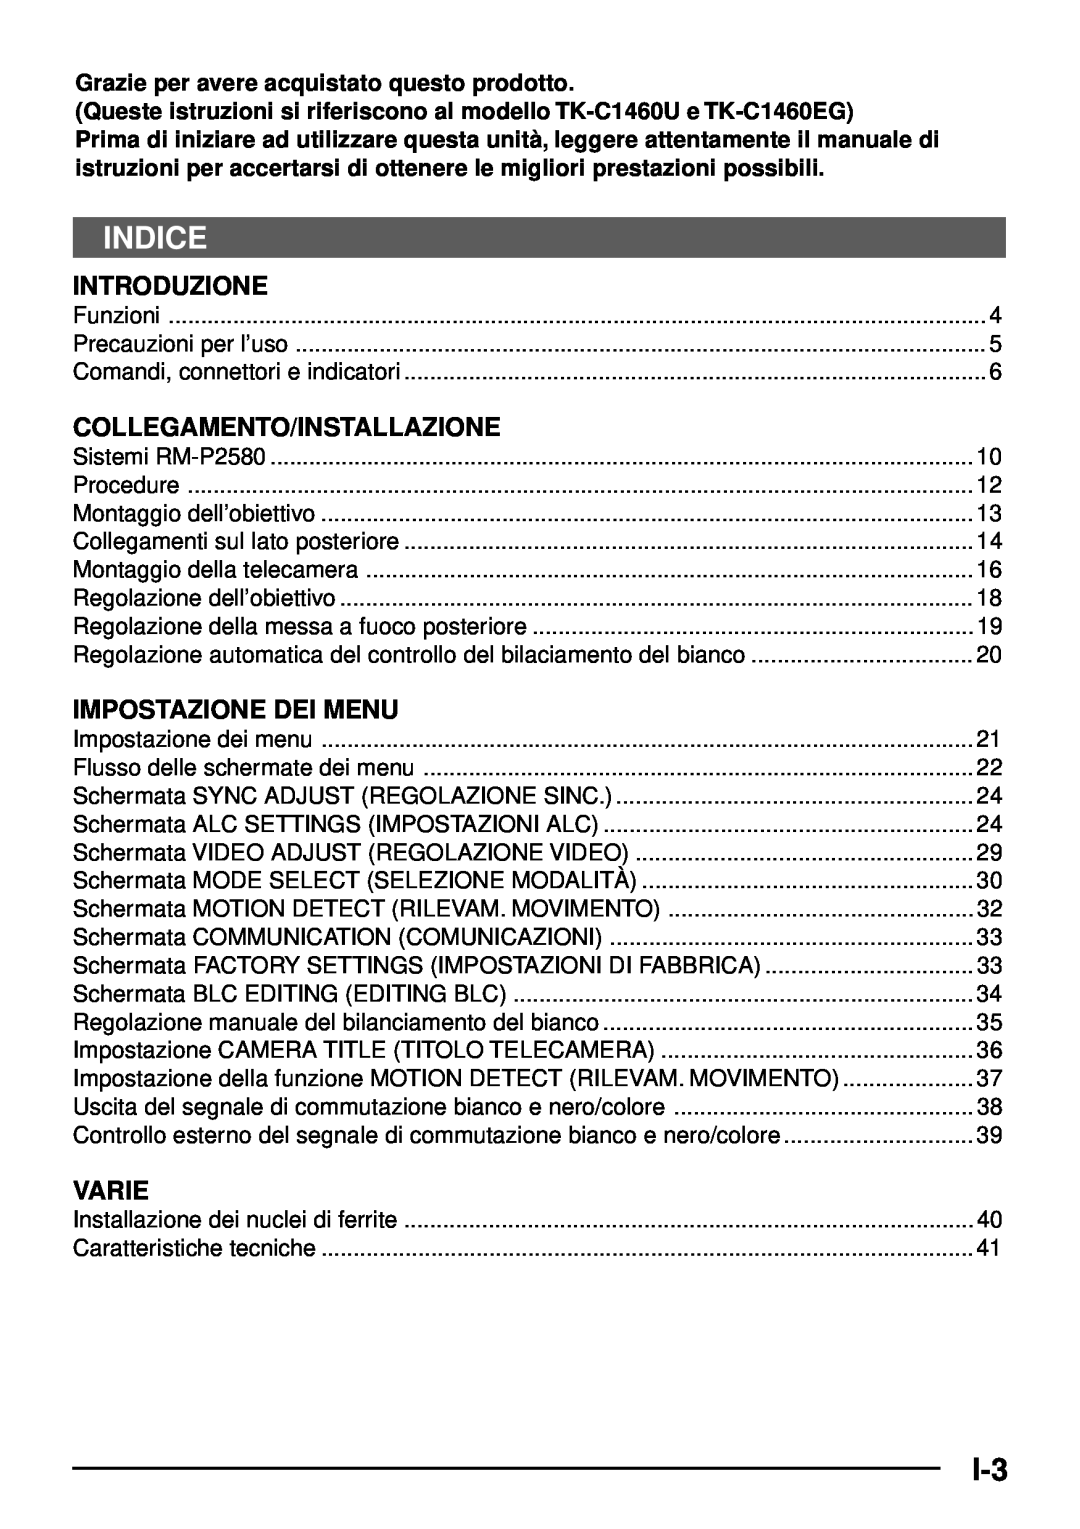 JVC TK-C1460 manual Indice, Introduzione, Collegamento/Installazione, Impostazione Dei Menu, Varie 